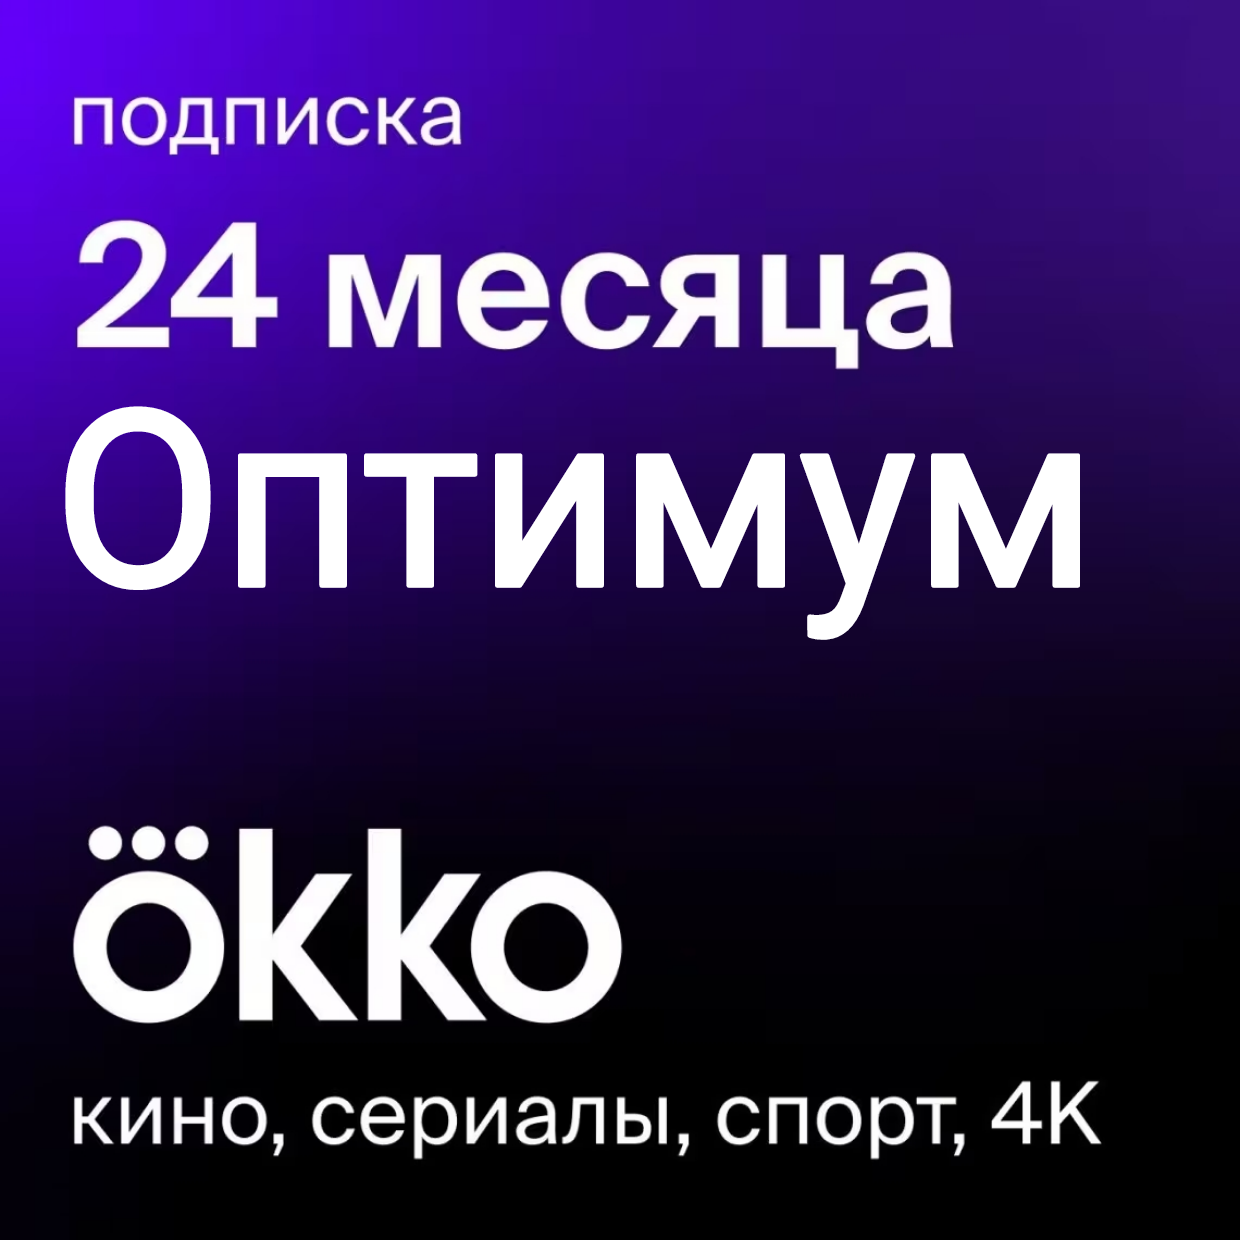 Подписка на онлайн-кинотеатр Okko Оптимум 24 месяца